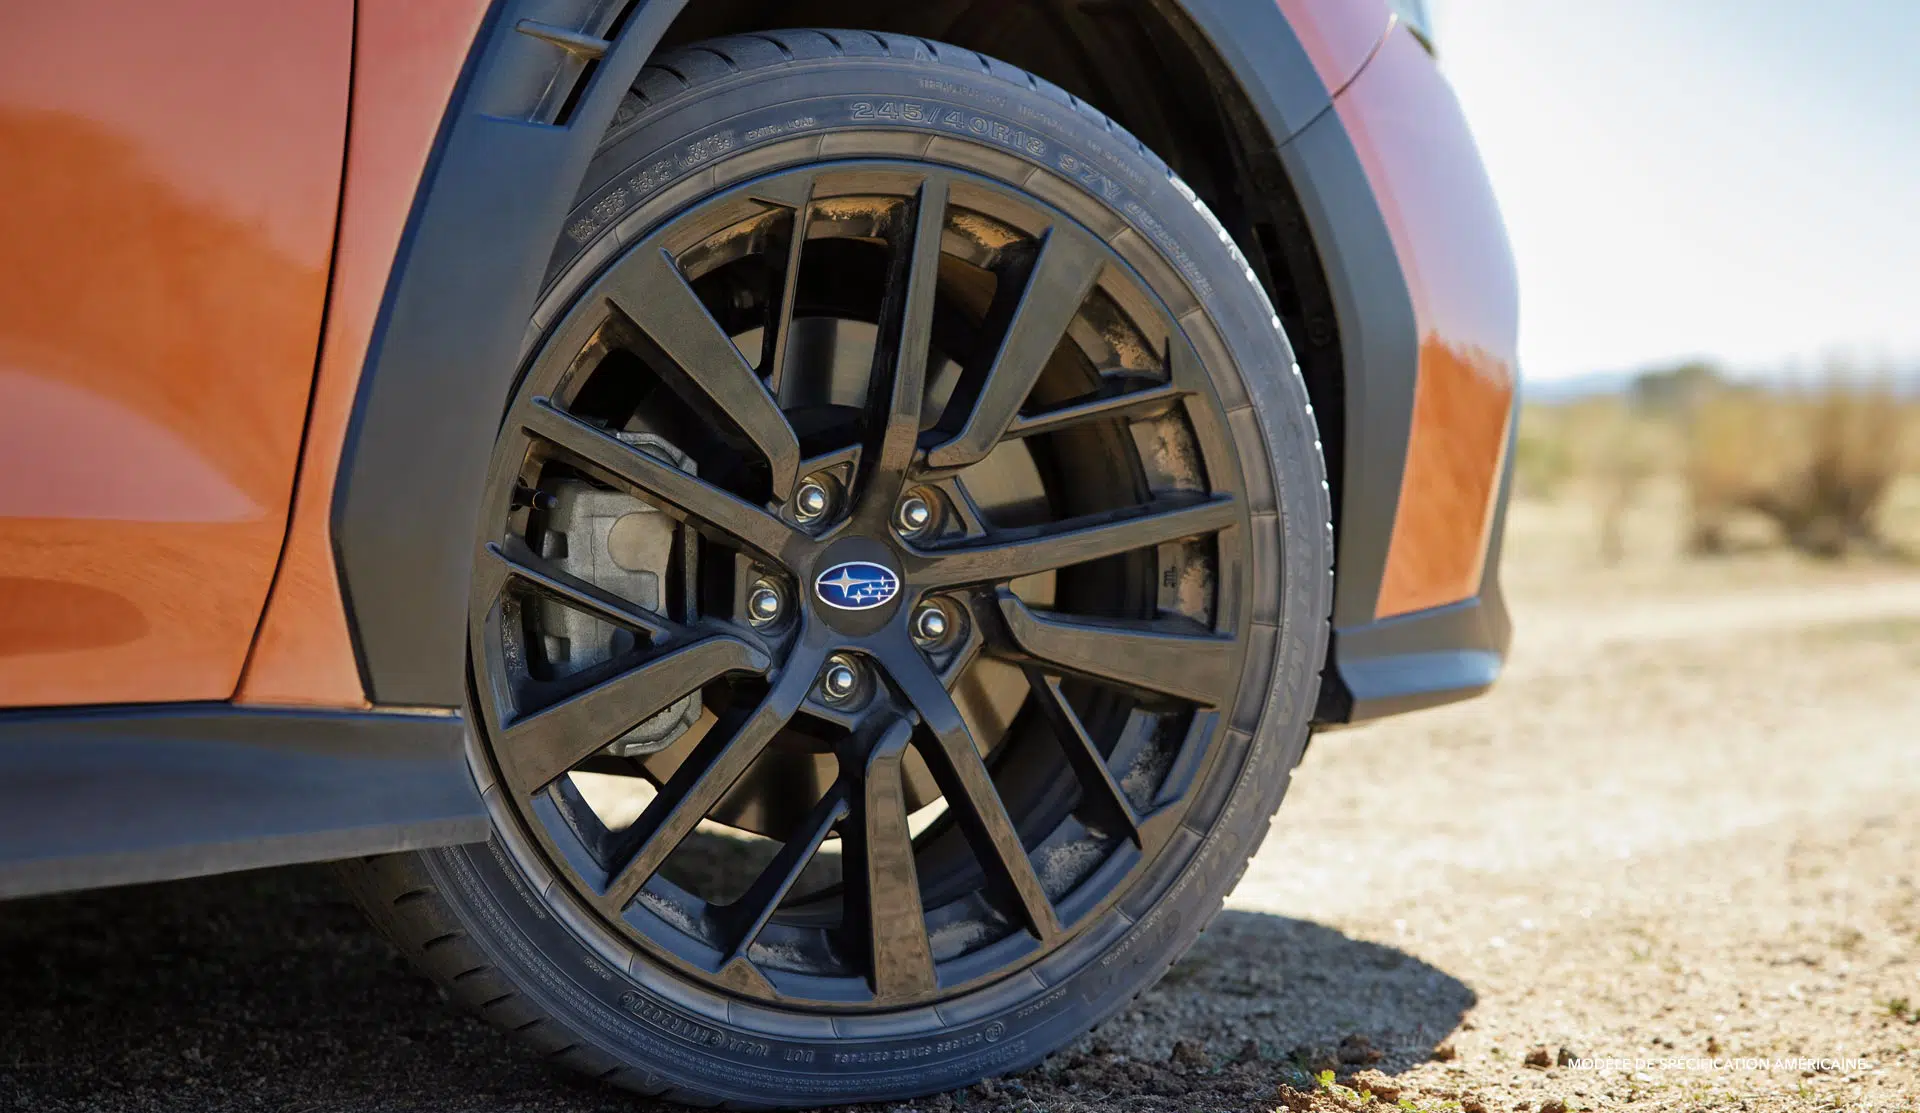 Summer performance tires on 17- or 18-inch alloy wheels. Source: https://www.subaru.com/2022-wrx